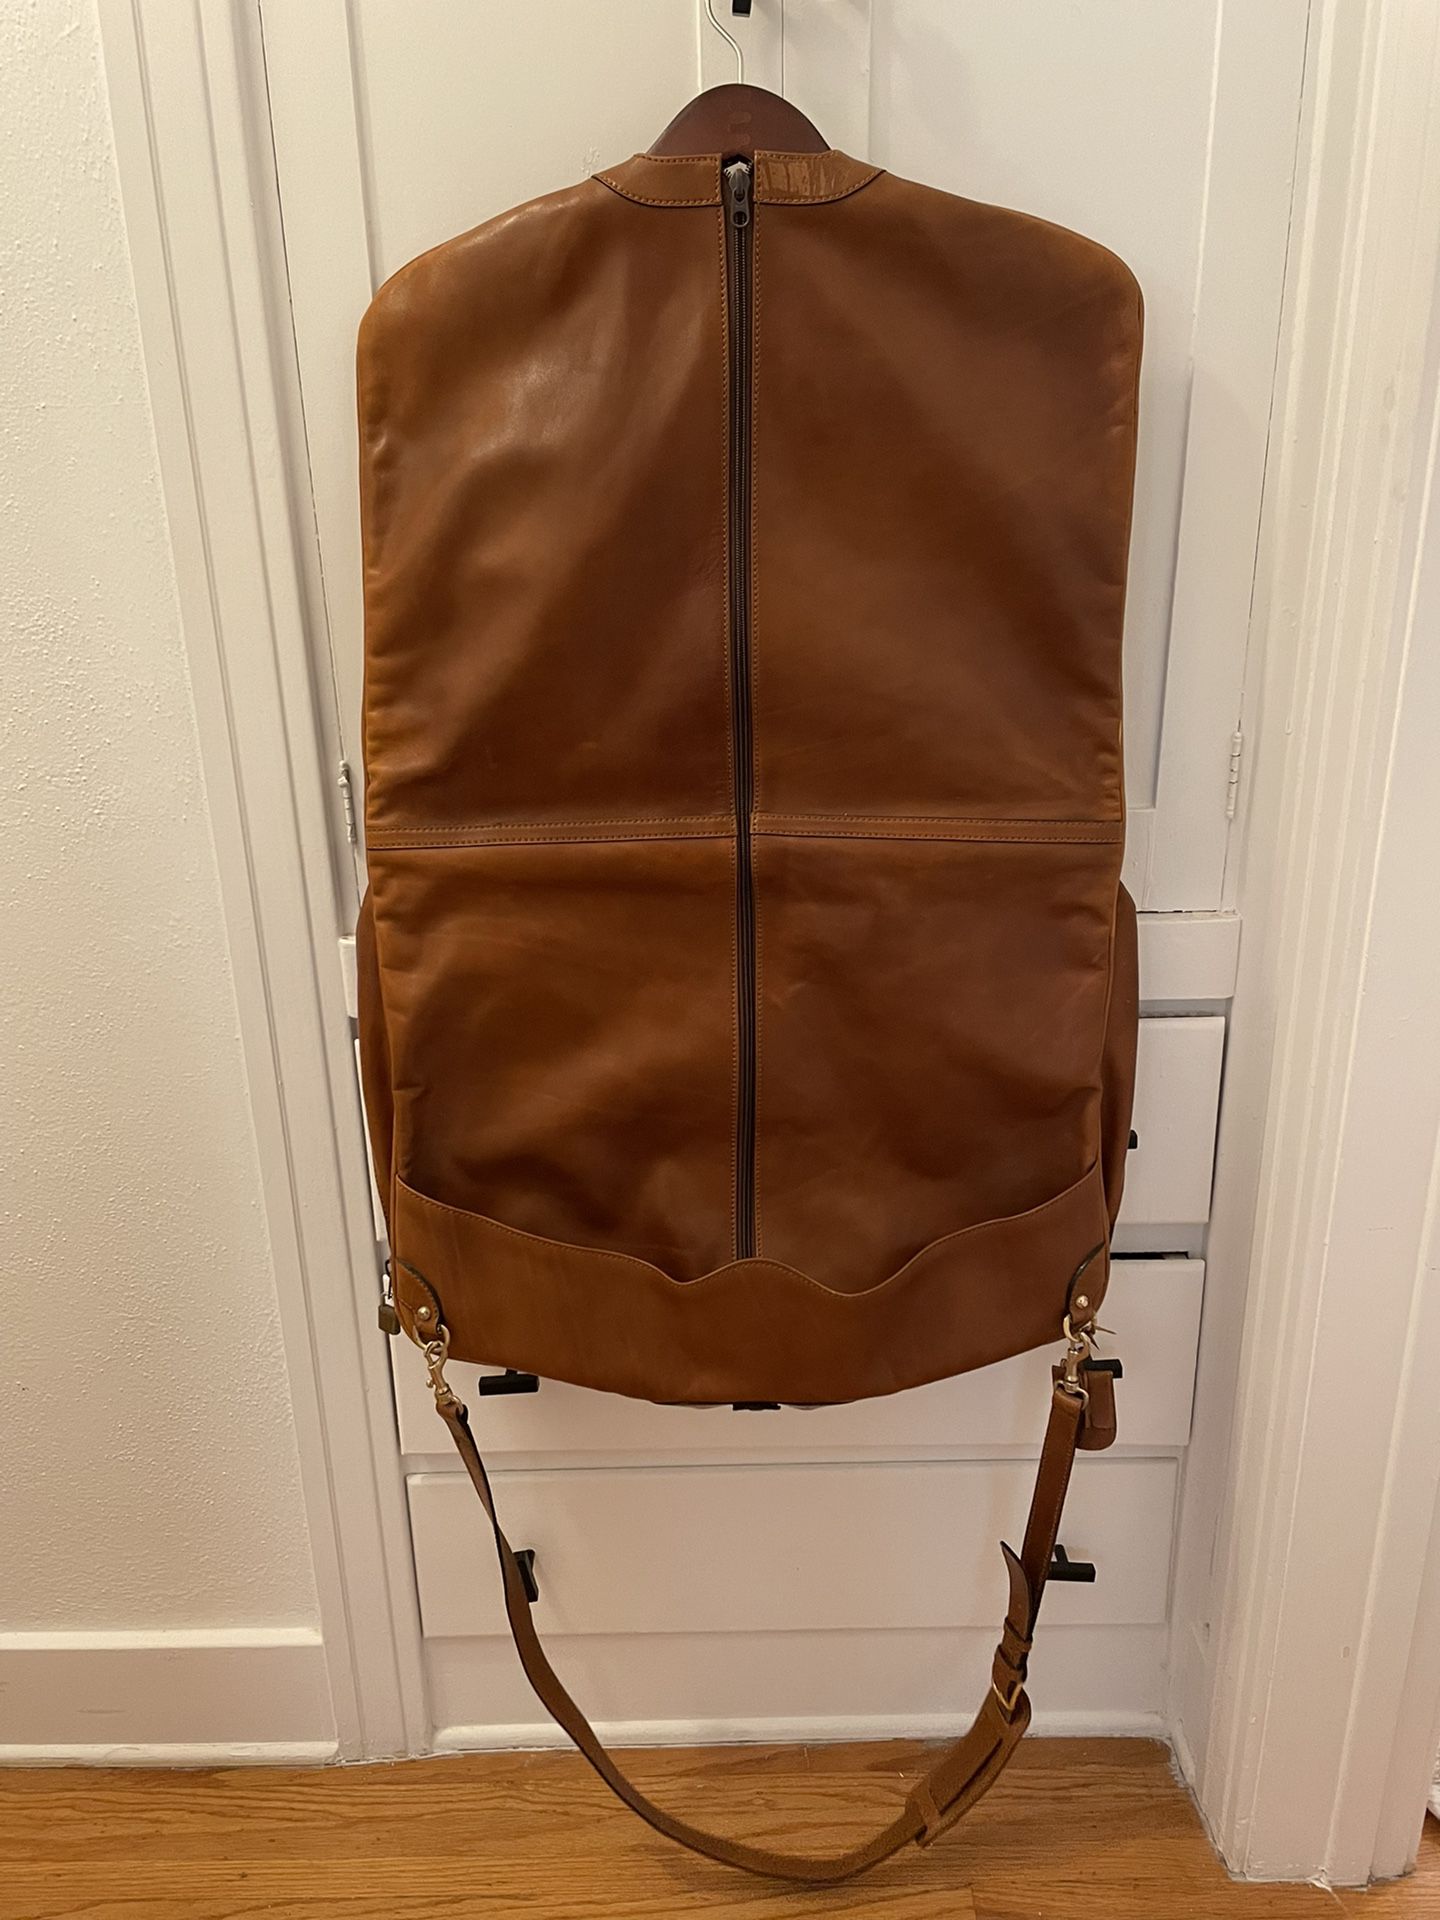 BALLY Garment Bag Suiter Travel Bifold Pebbled Leather Brown w Hangtag VTG RARE